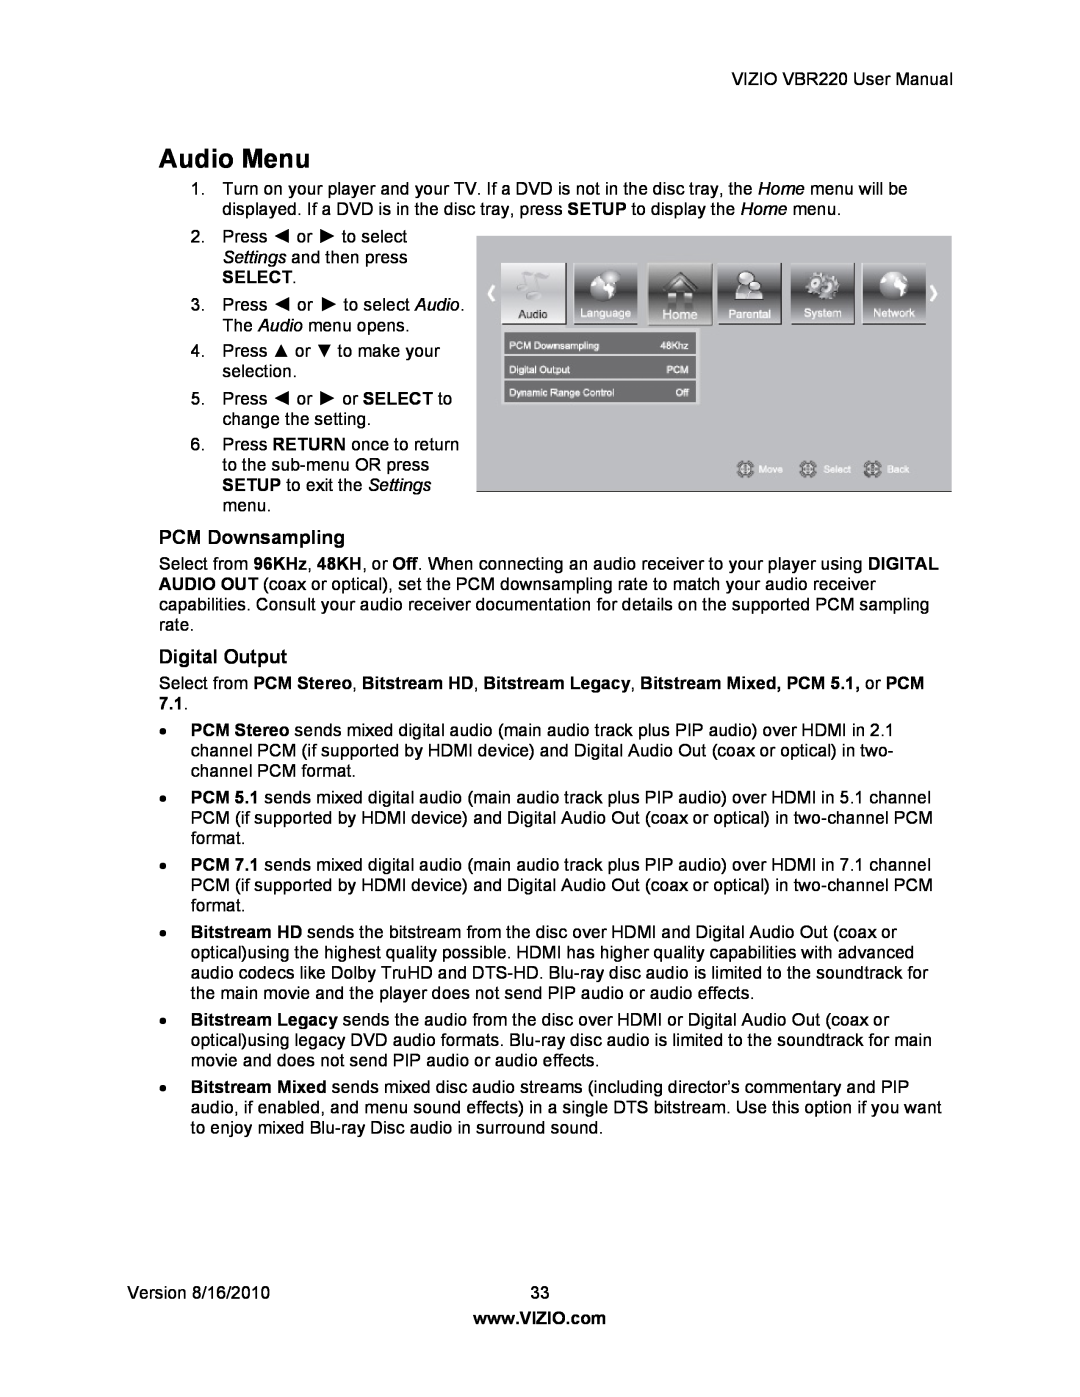 Panasonic VBR220 user manual Audio Menu, PCM Downsampling, Digital Output, Select 